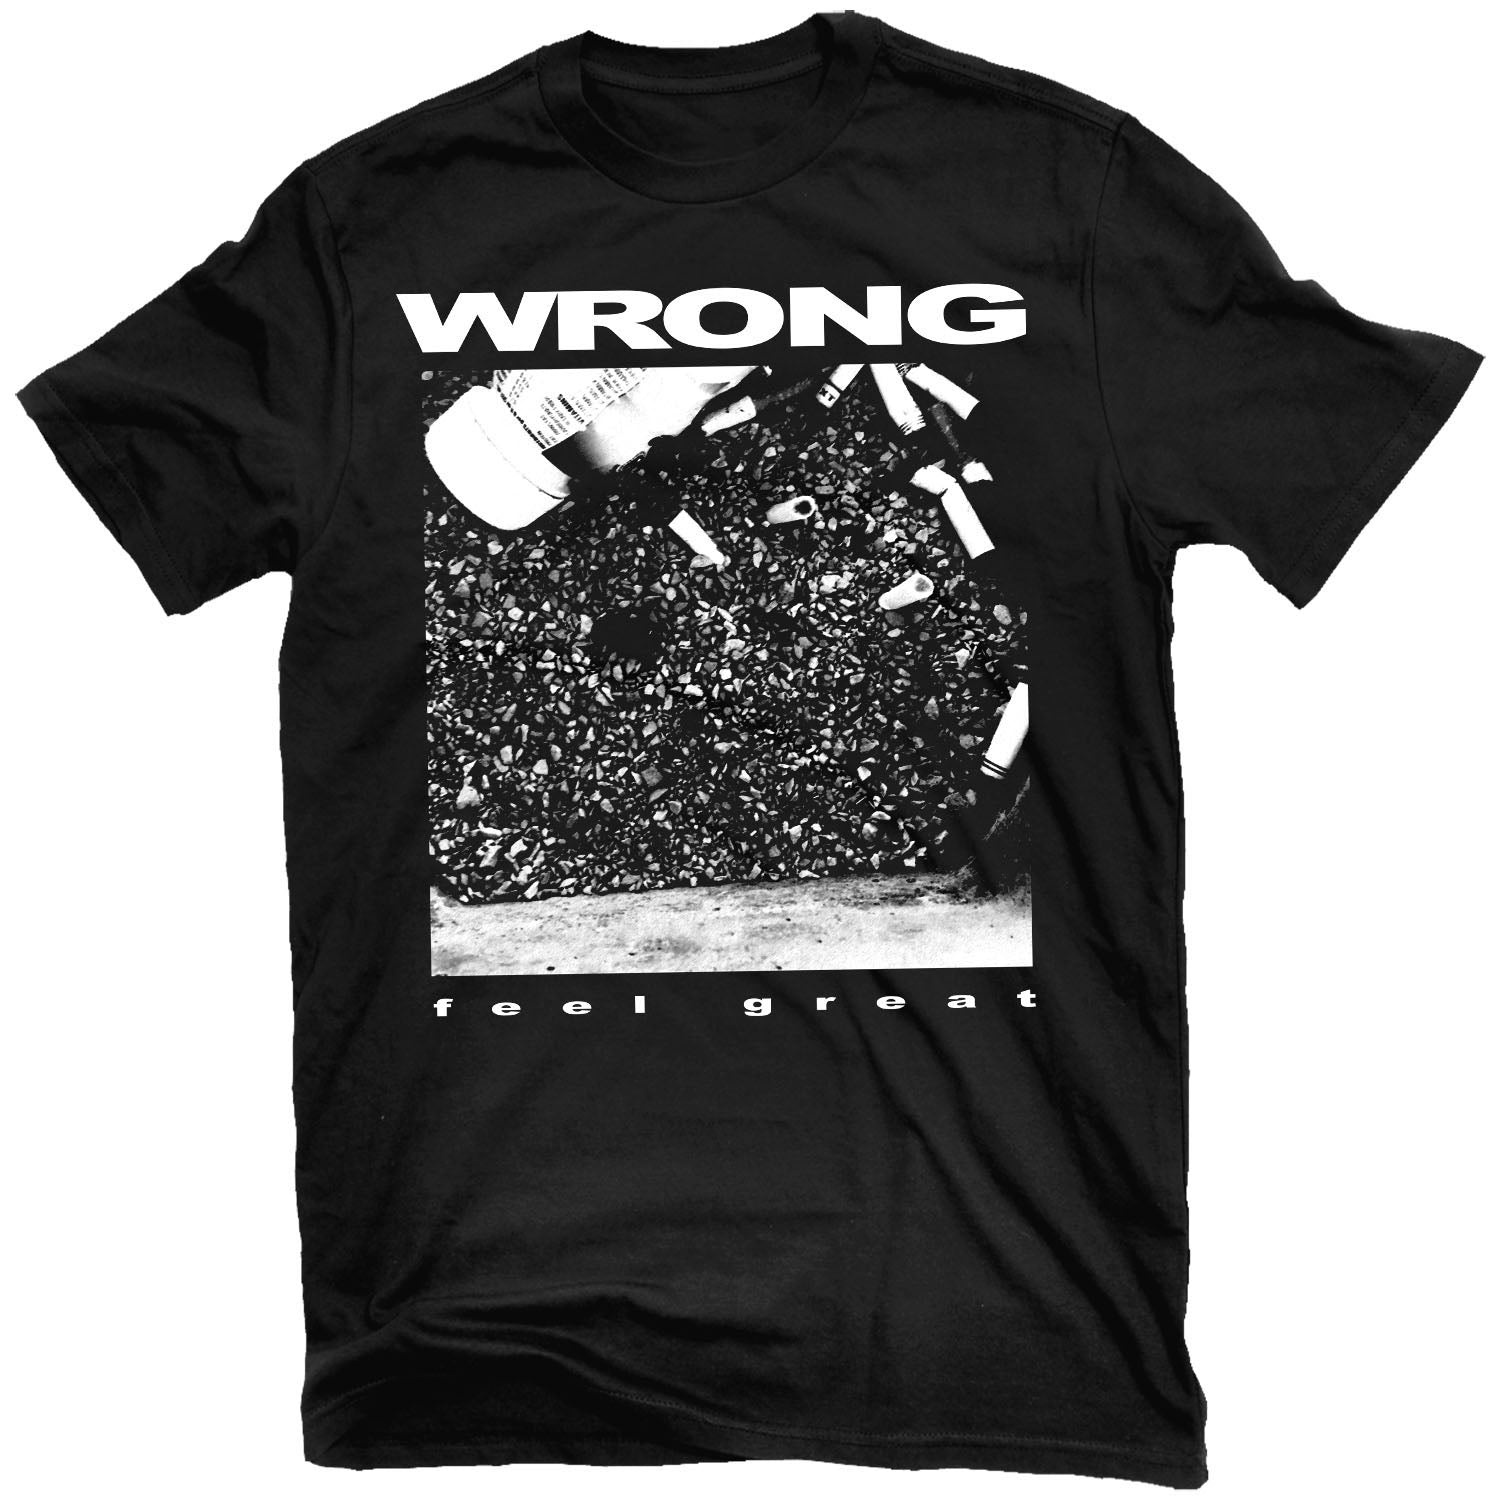 Wrong "Feel Great" T-Shirt